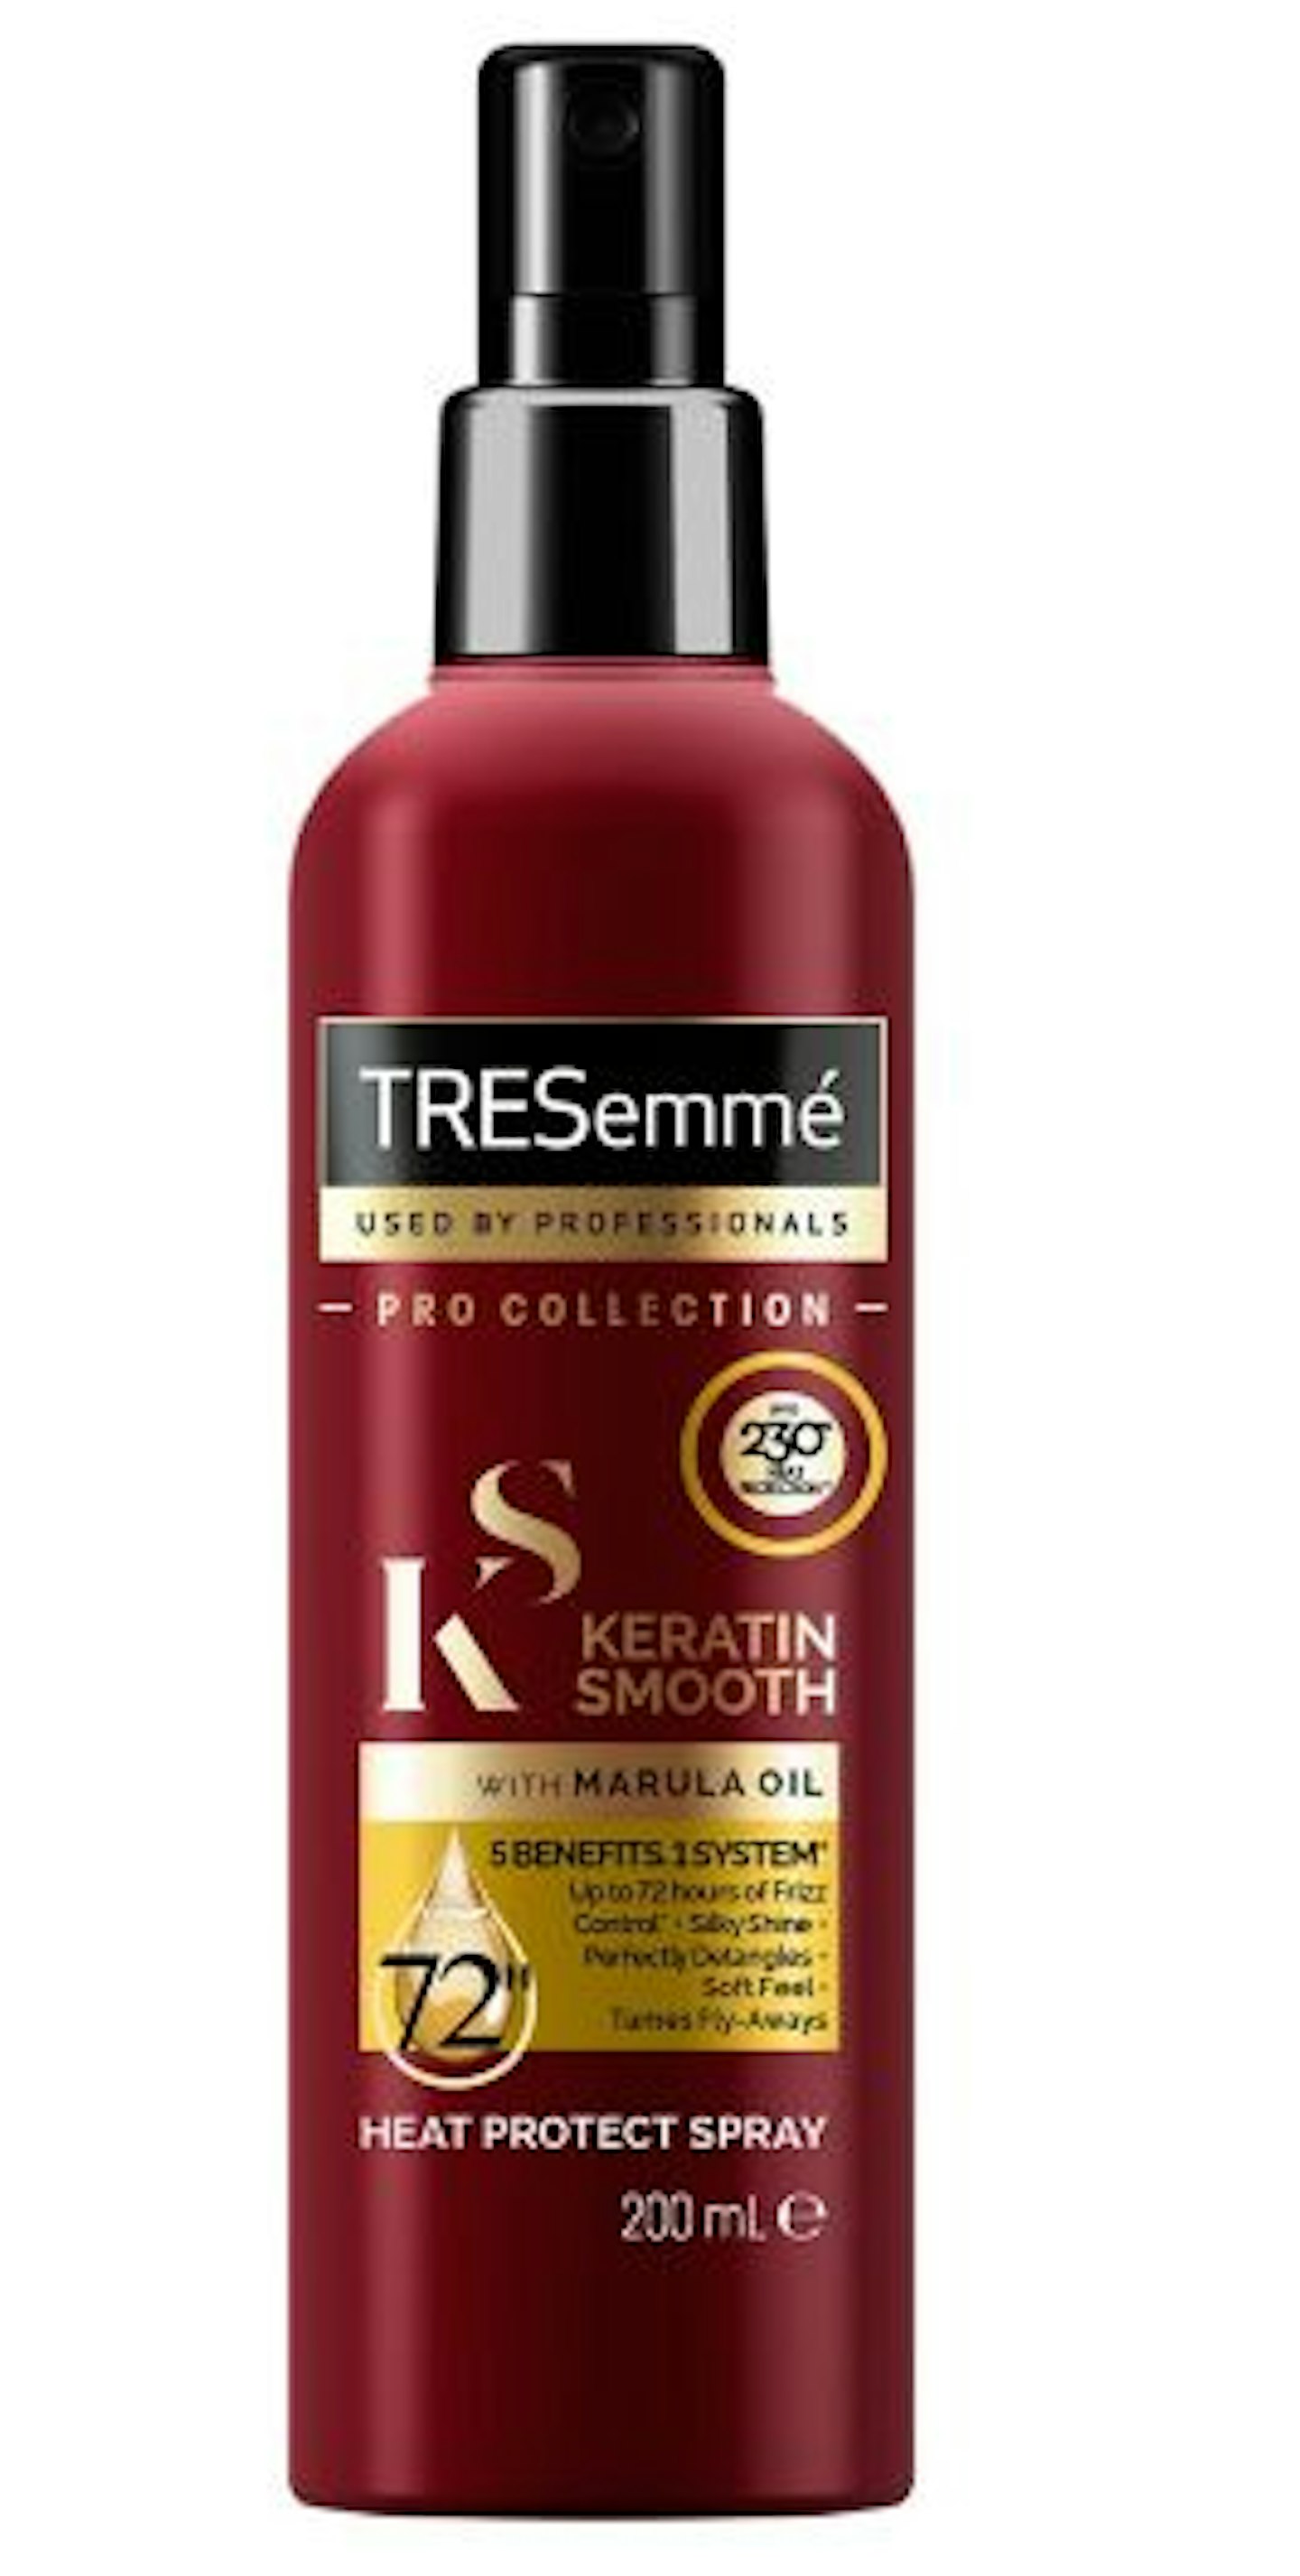 TRESemme Keratin Smooth Heat Protect Spray, £5.99